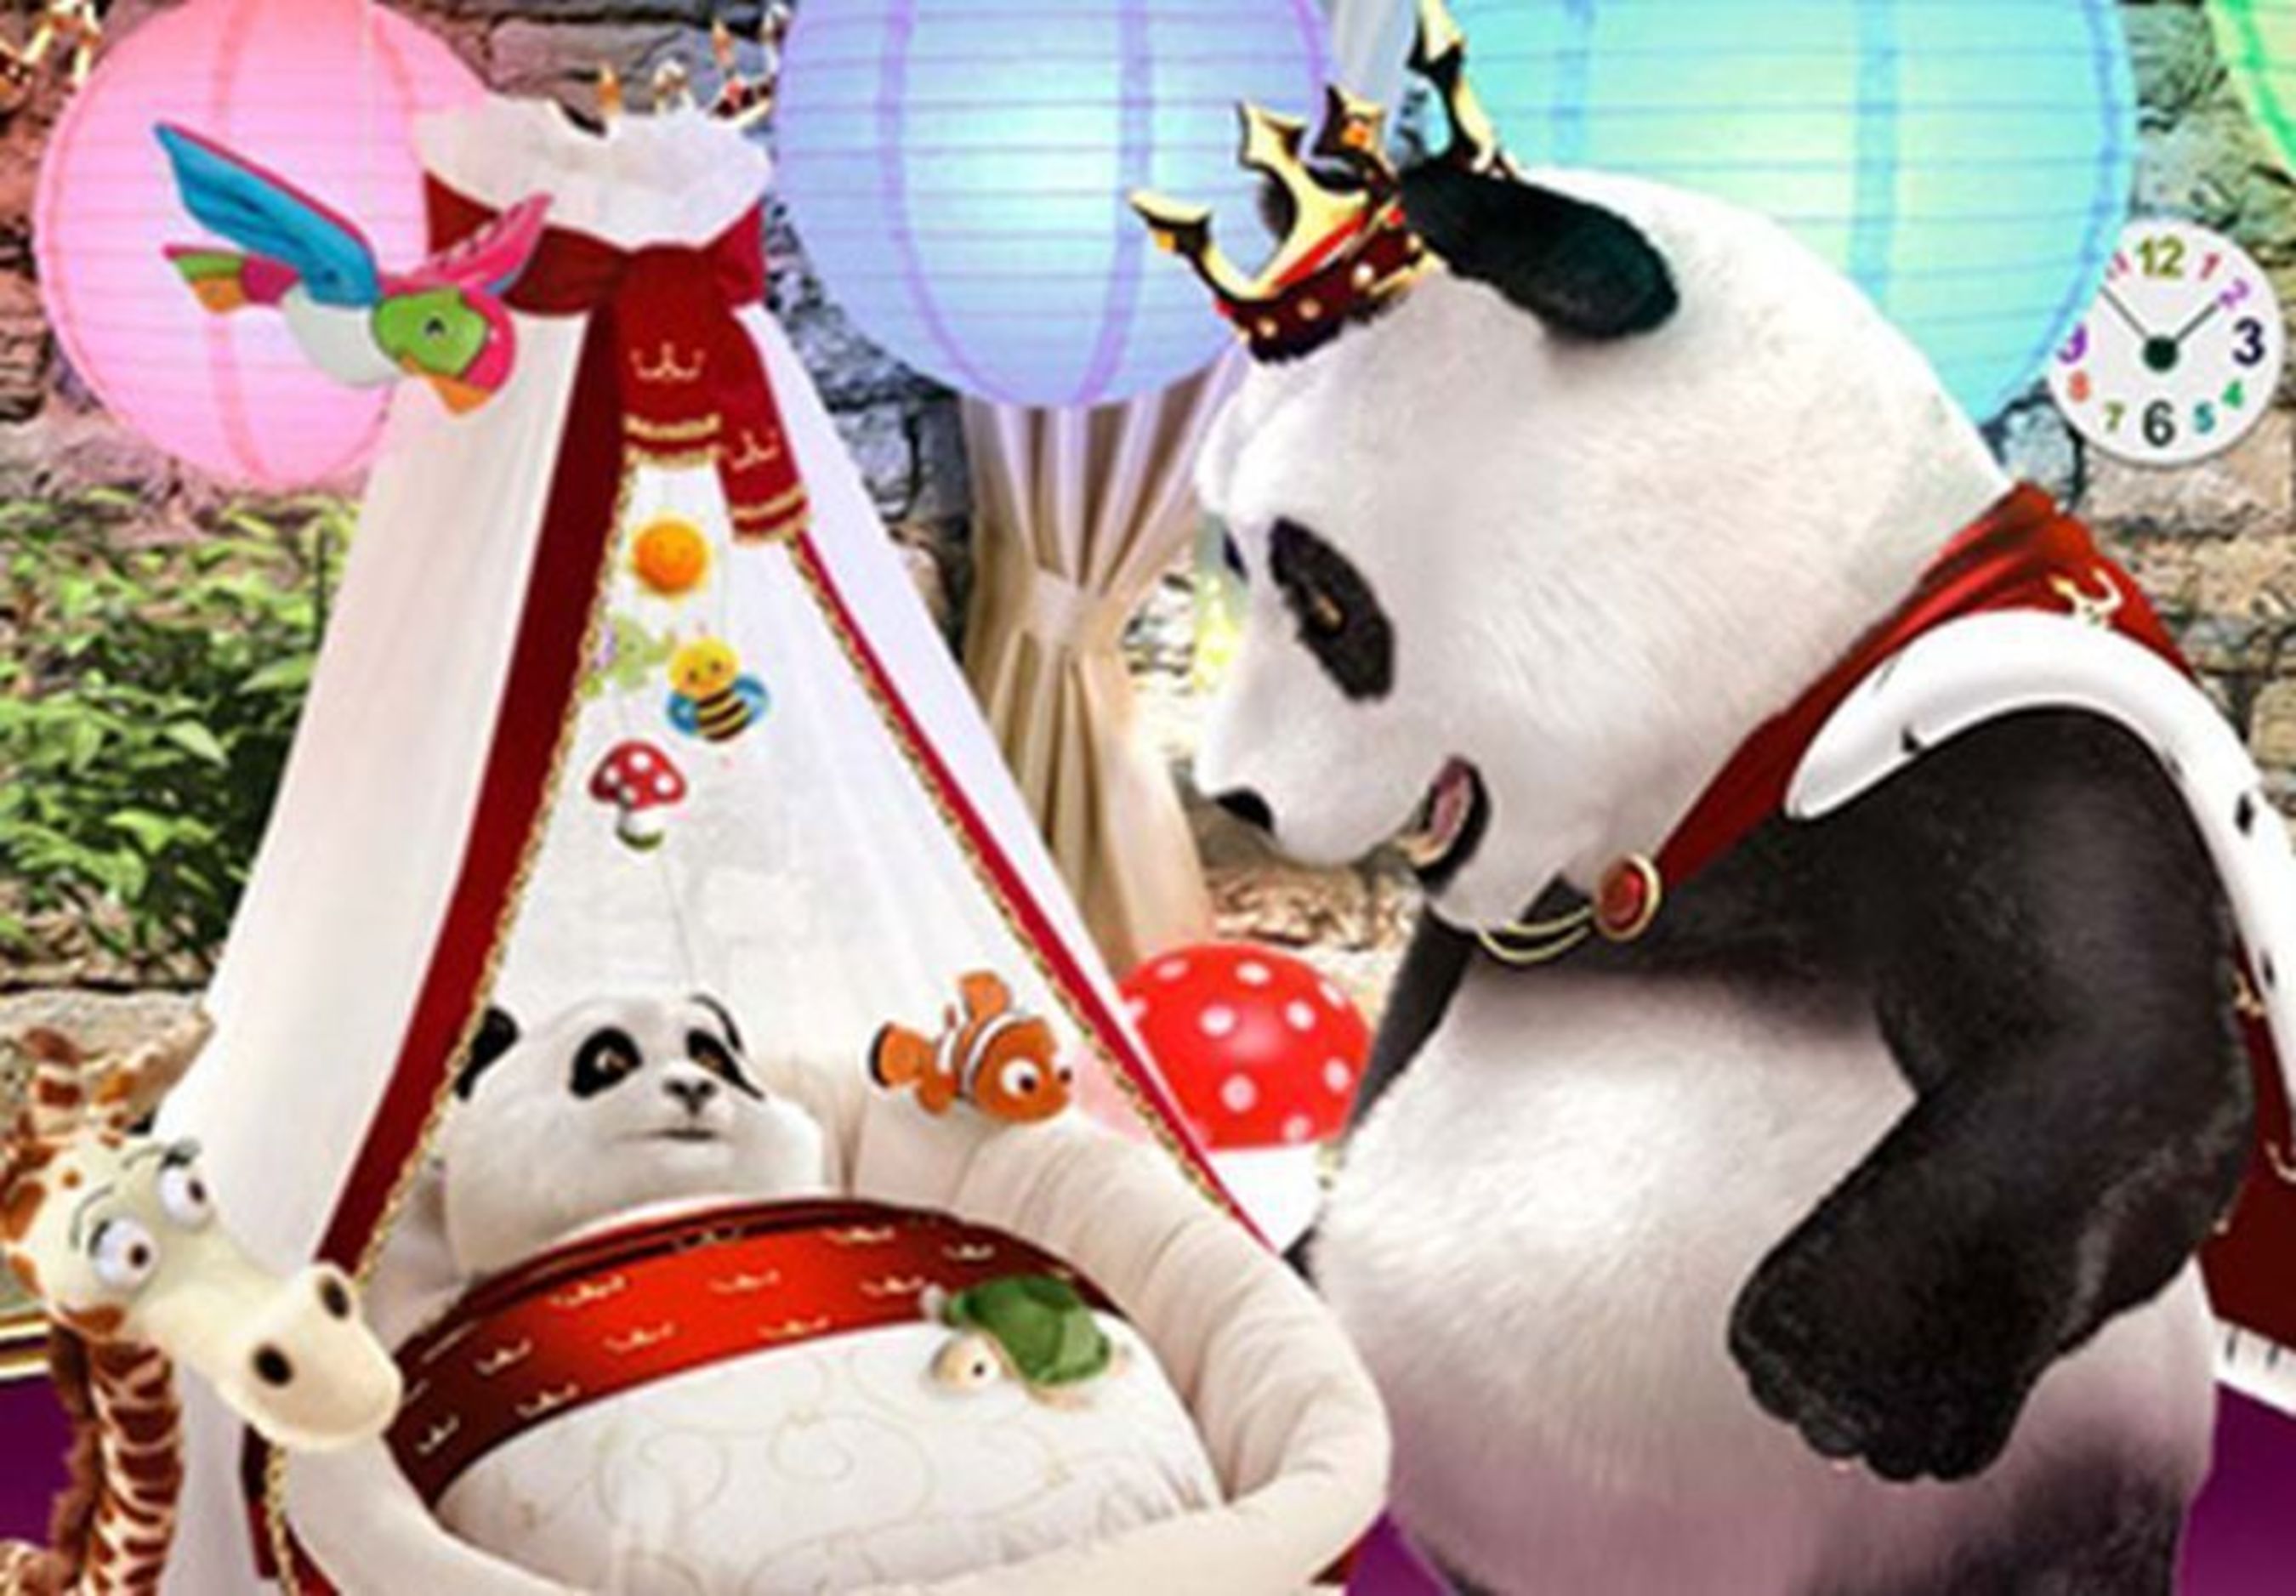 The design shows the panda mascot looking at a little panda baby lying in the crib. (PRNewsFoto/Royalpanda)